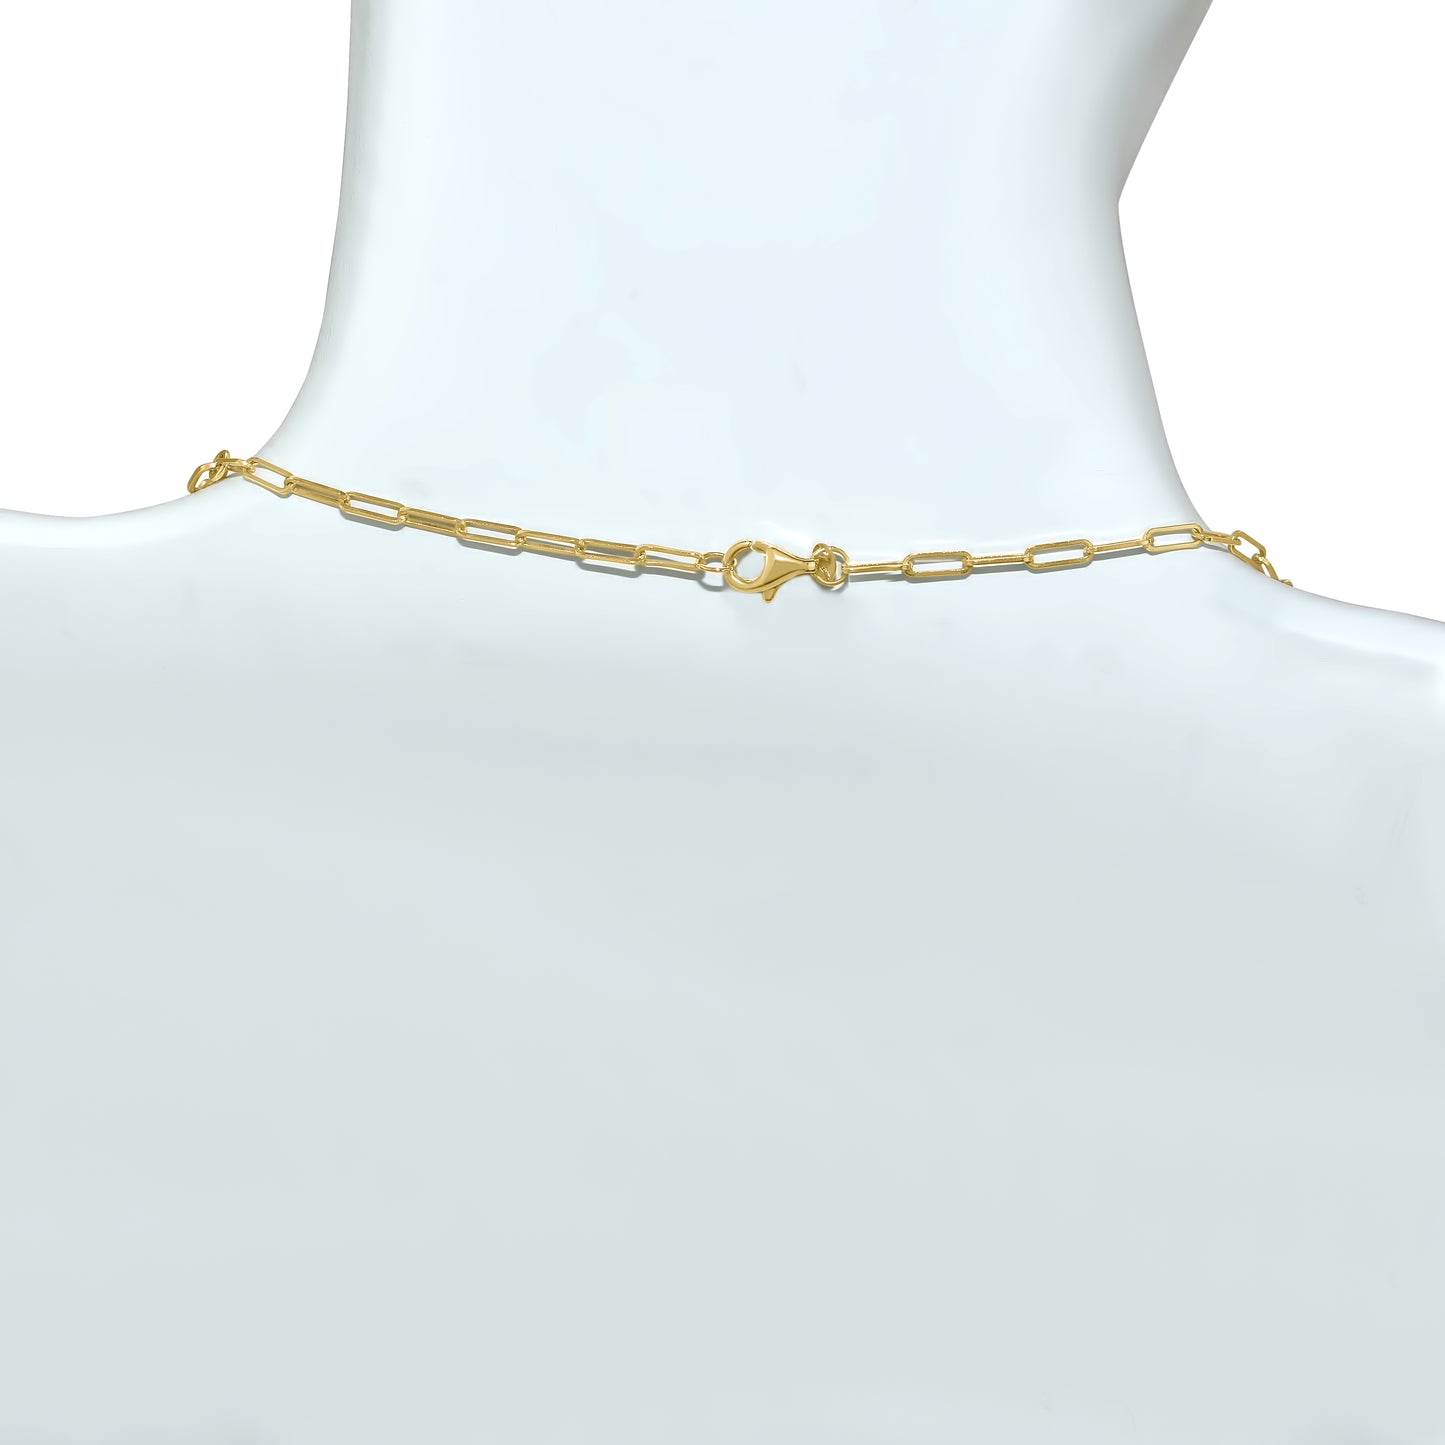 Séchic 14k Paperclip Mixed Gauge Adjustable Chain Necklace 18"